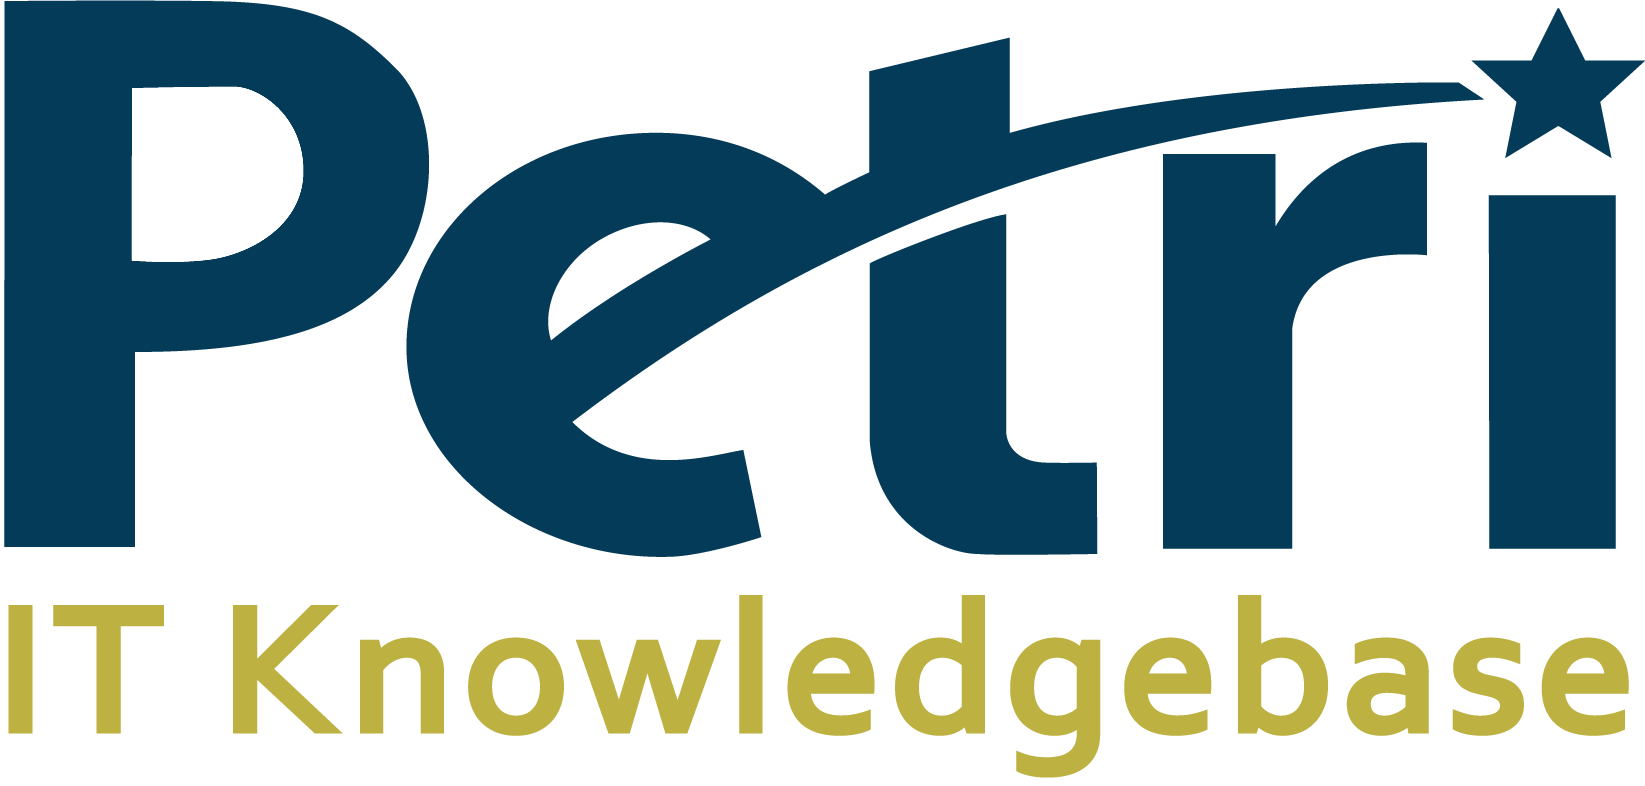 The Petri IT Knowledgebase